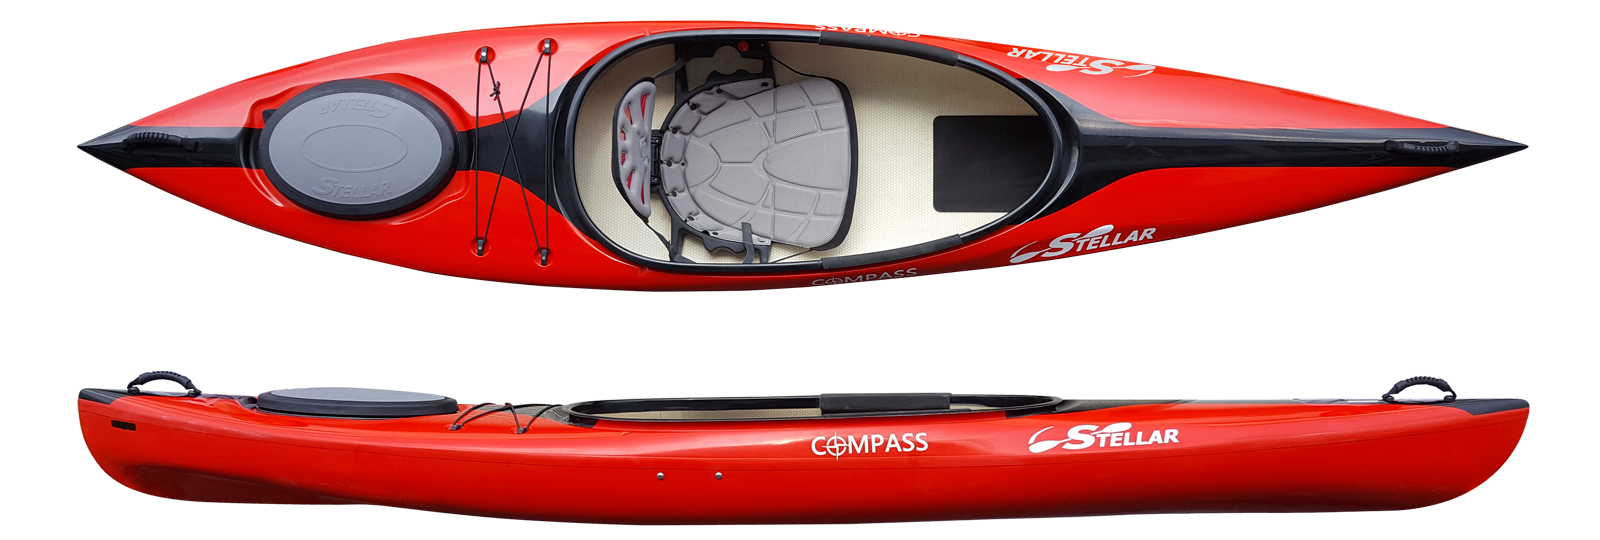 Kayaks: Compass 115 by Stellar Kayaks - Image 2581